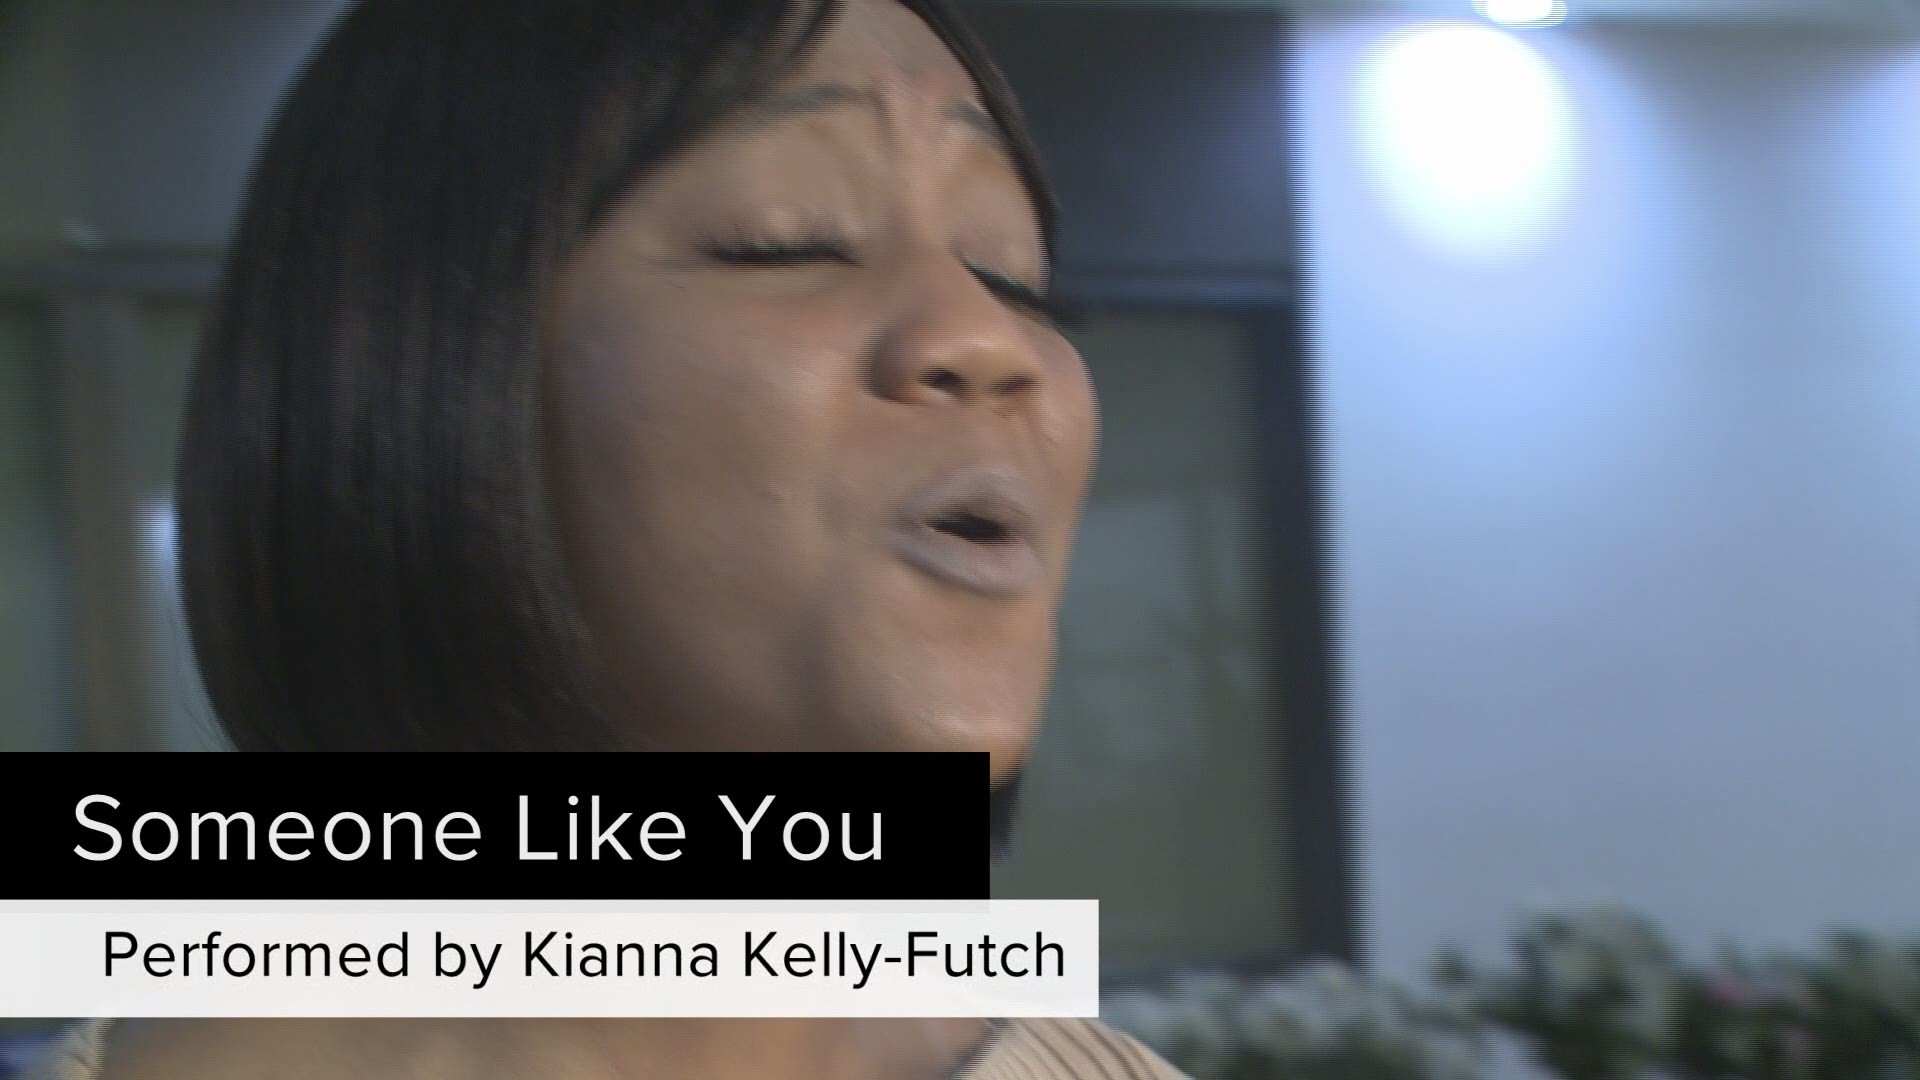 Kianna Kelly-Futch performs Someone Like You from Jekyll&Hyde